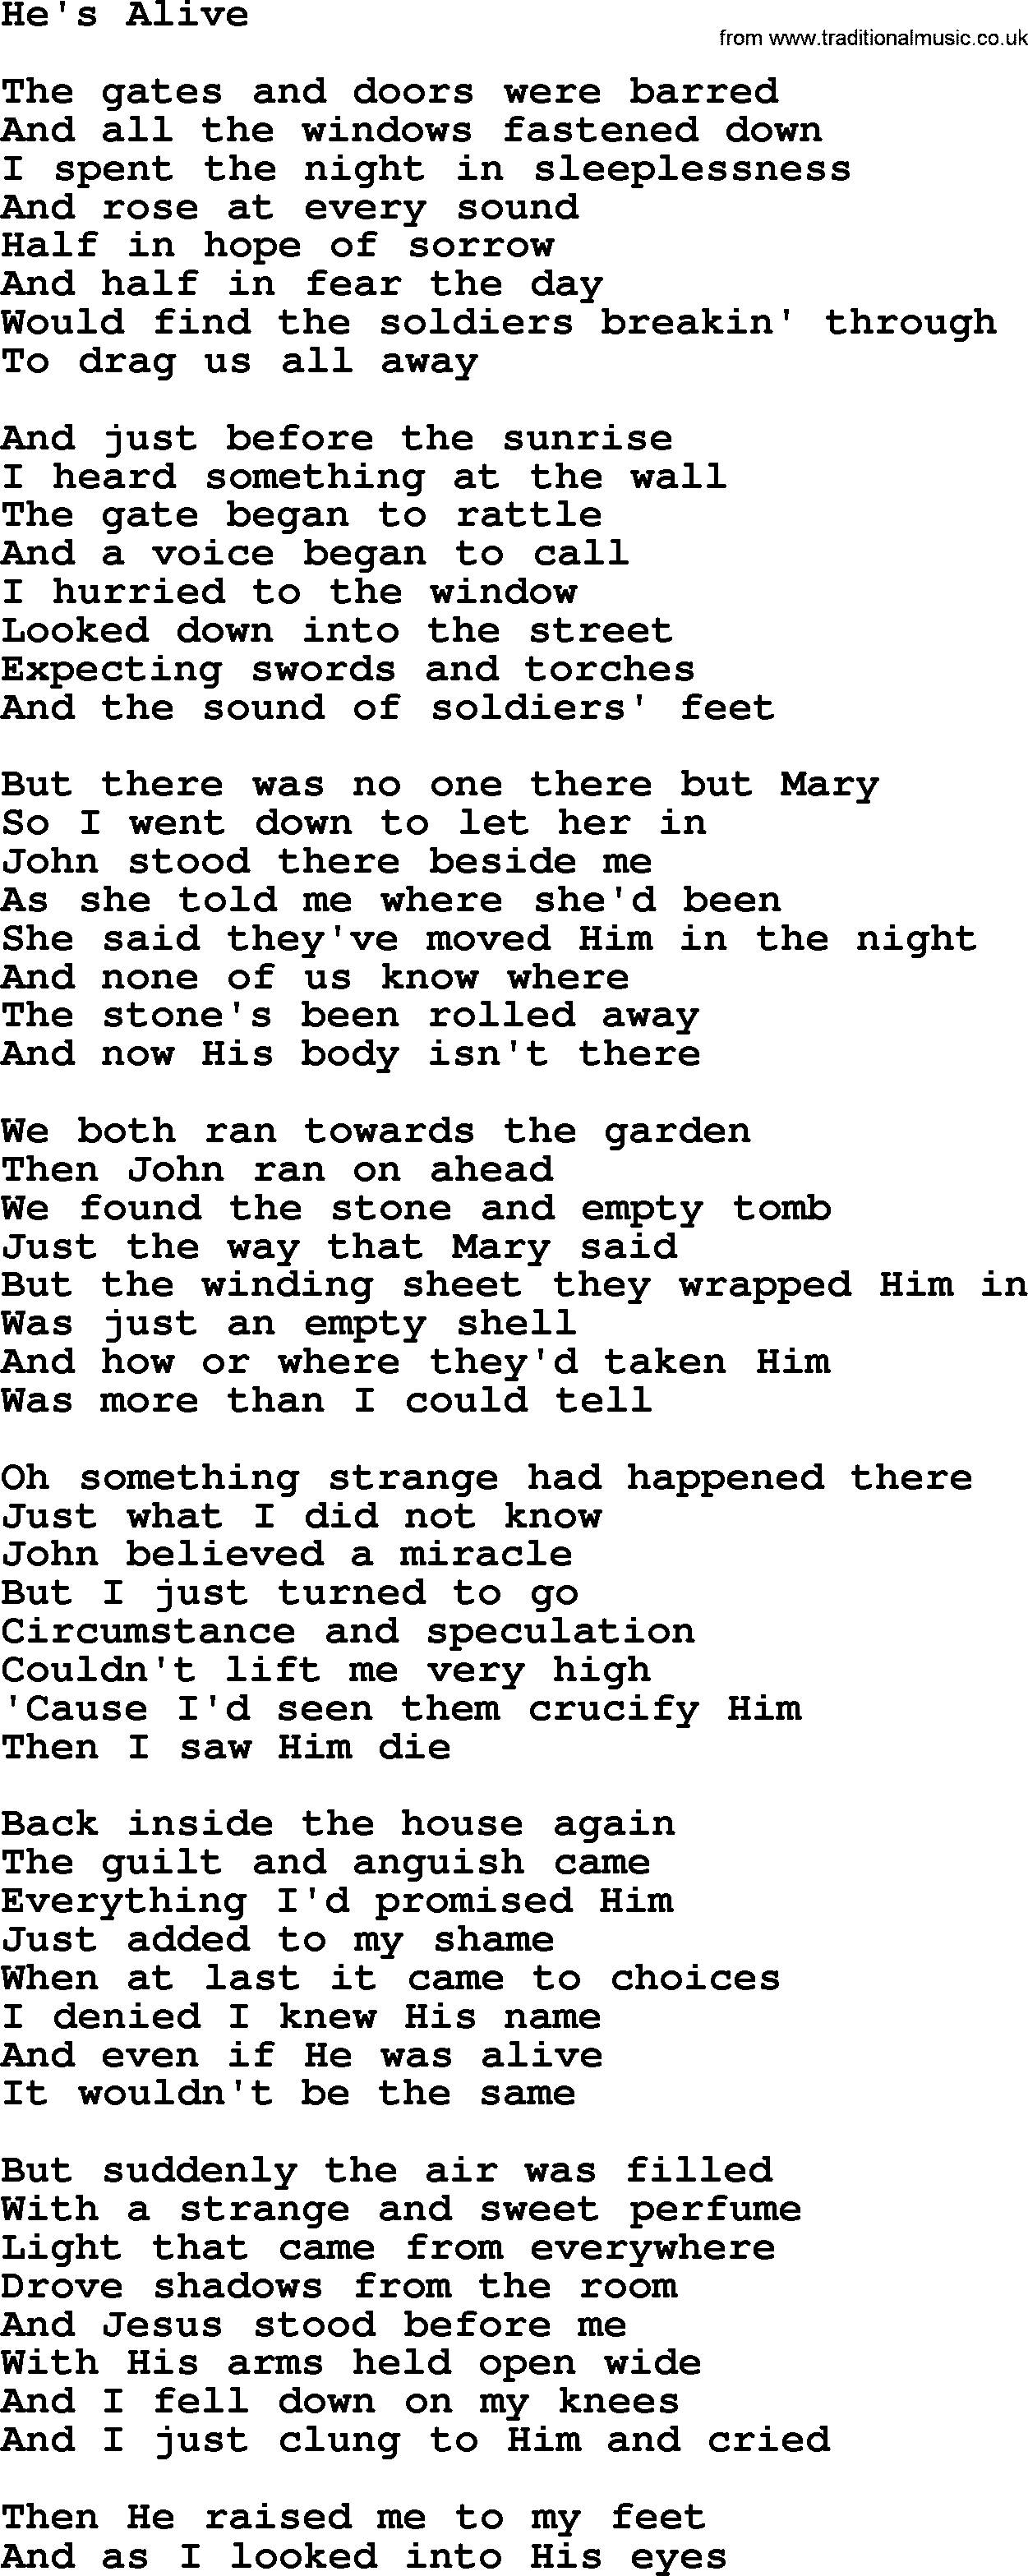 Dolly Parton song He's Alive.txt lyrics